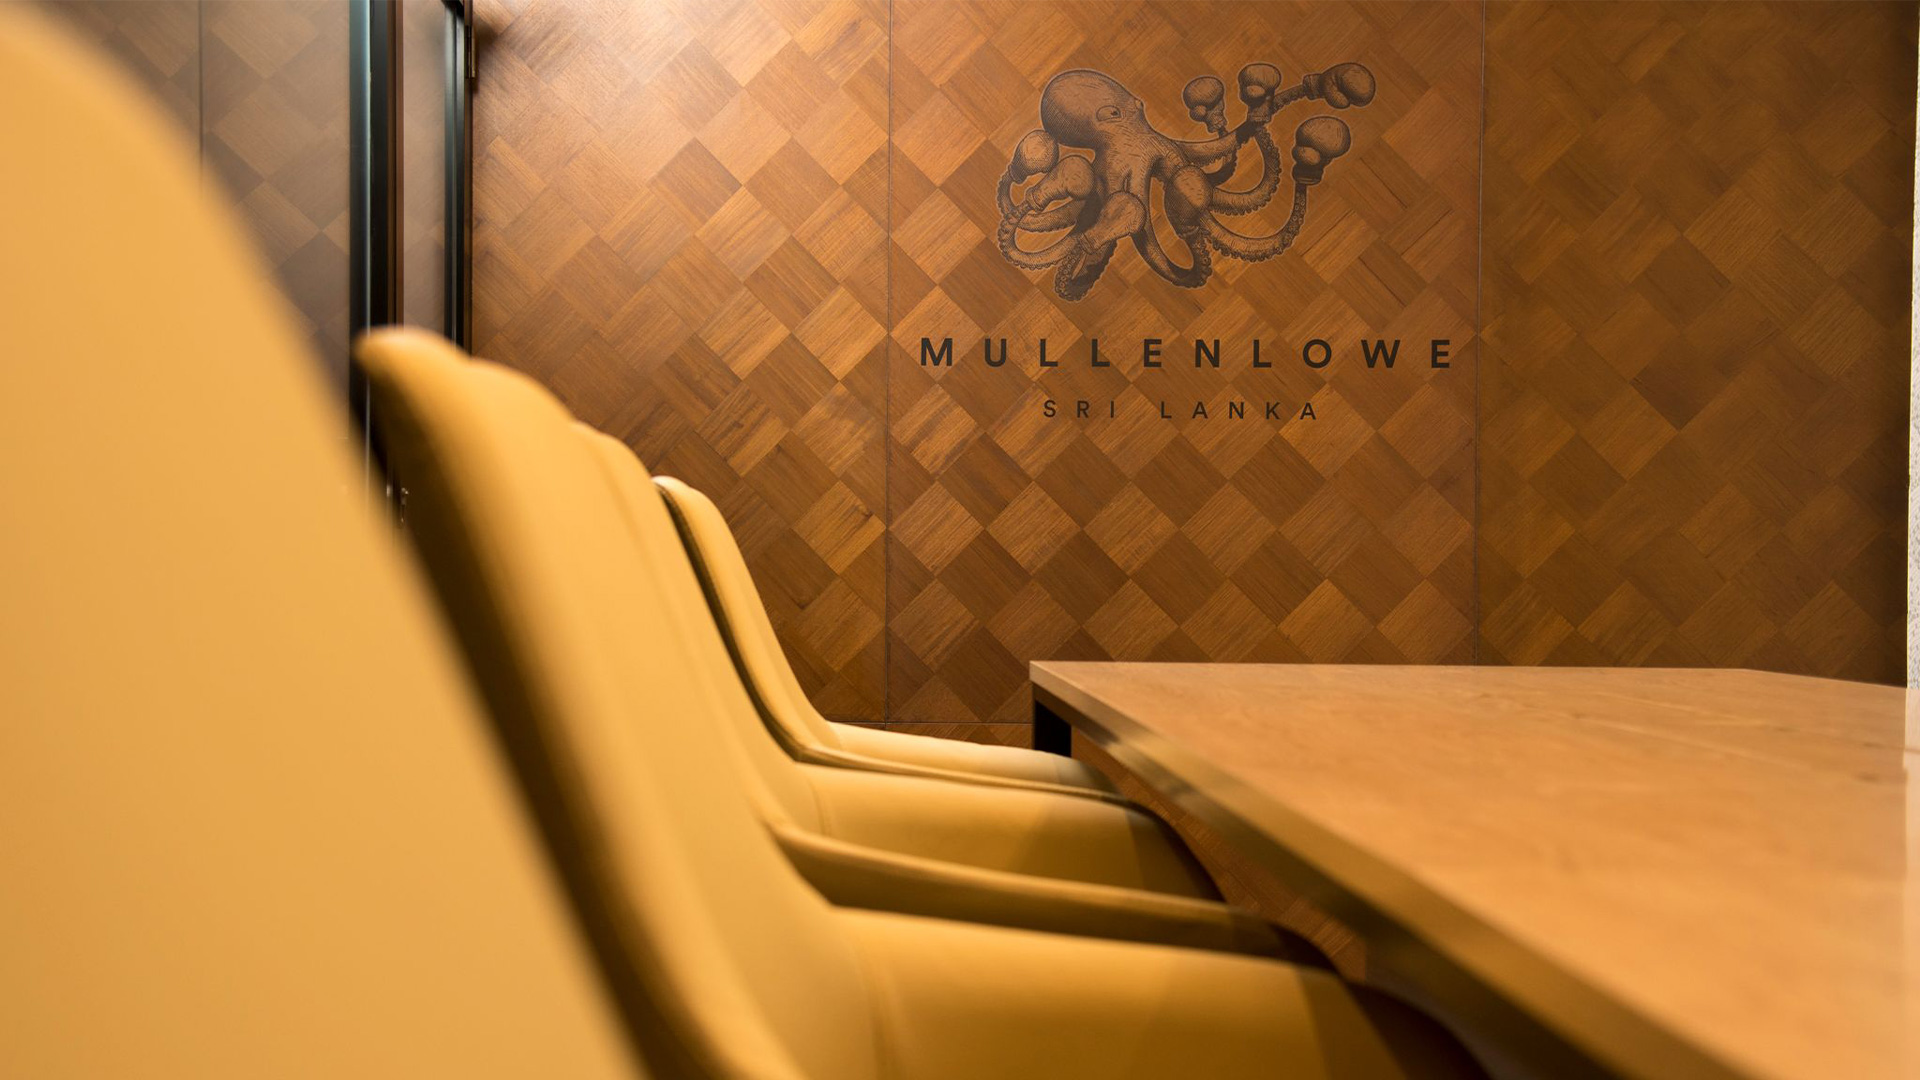 Mullenlowe office interior design sri lanka